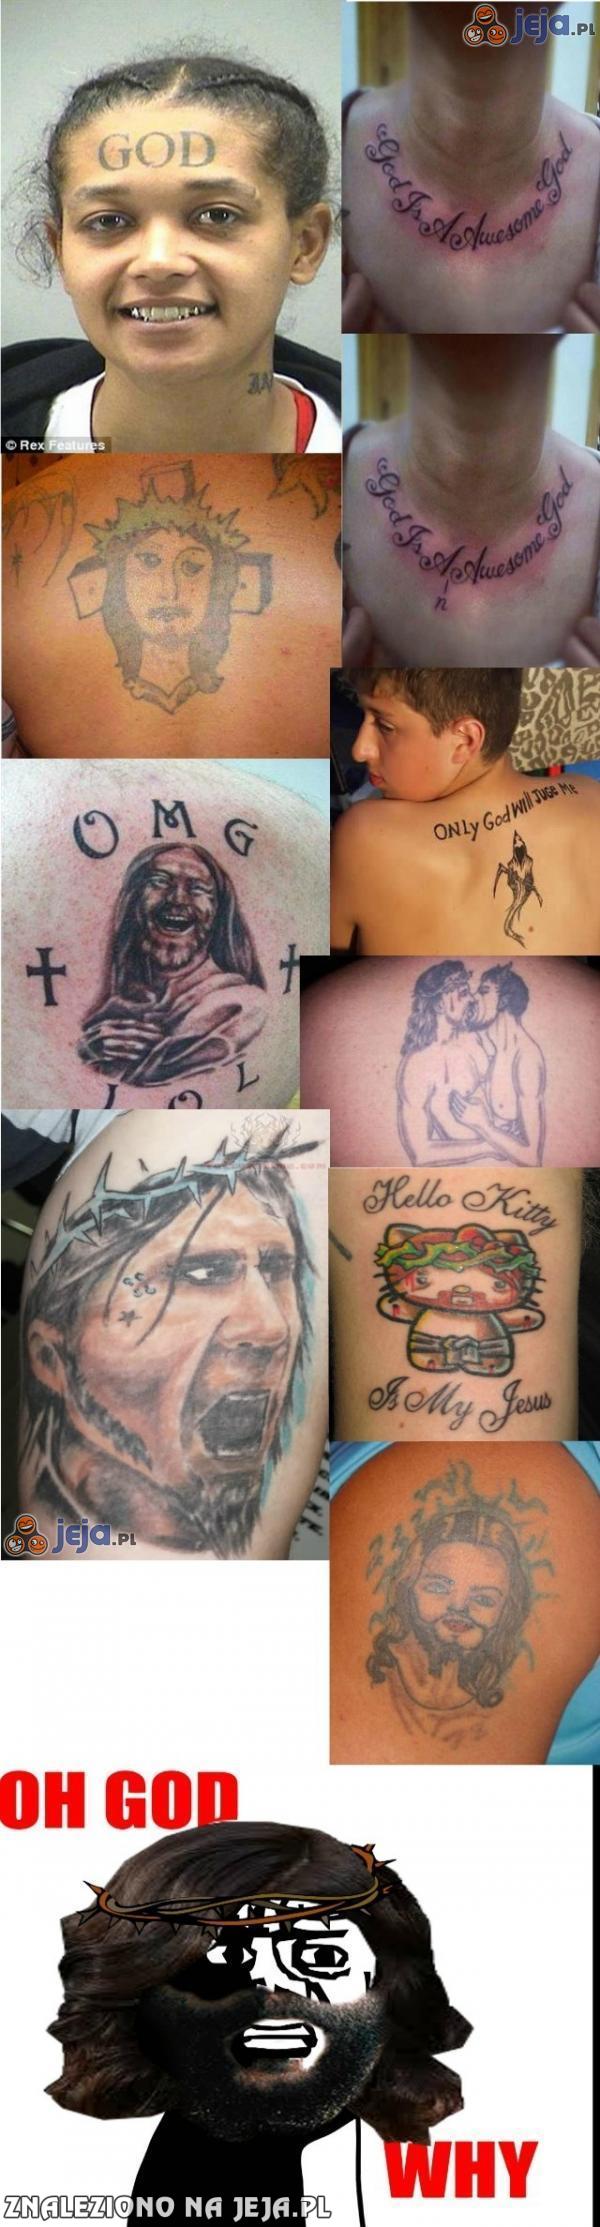 Religijne tatuaże?